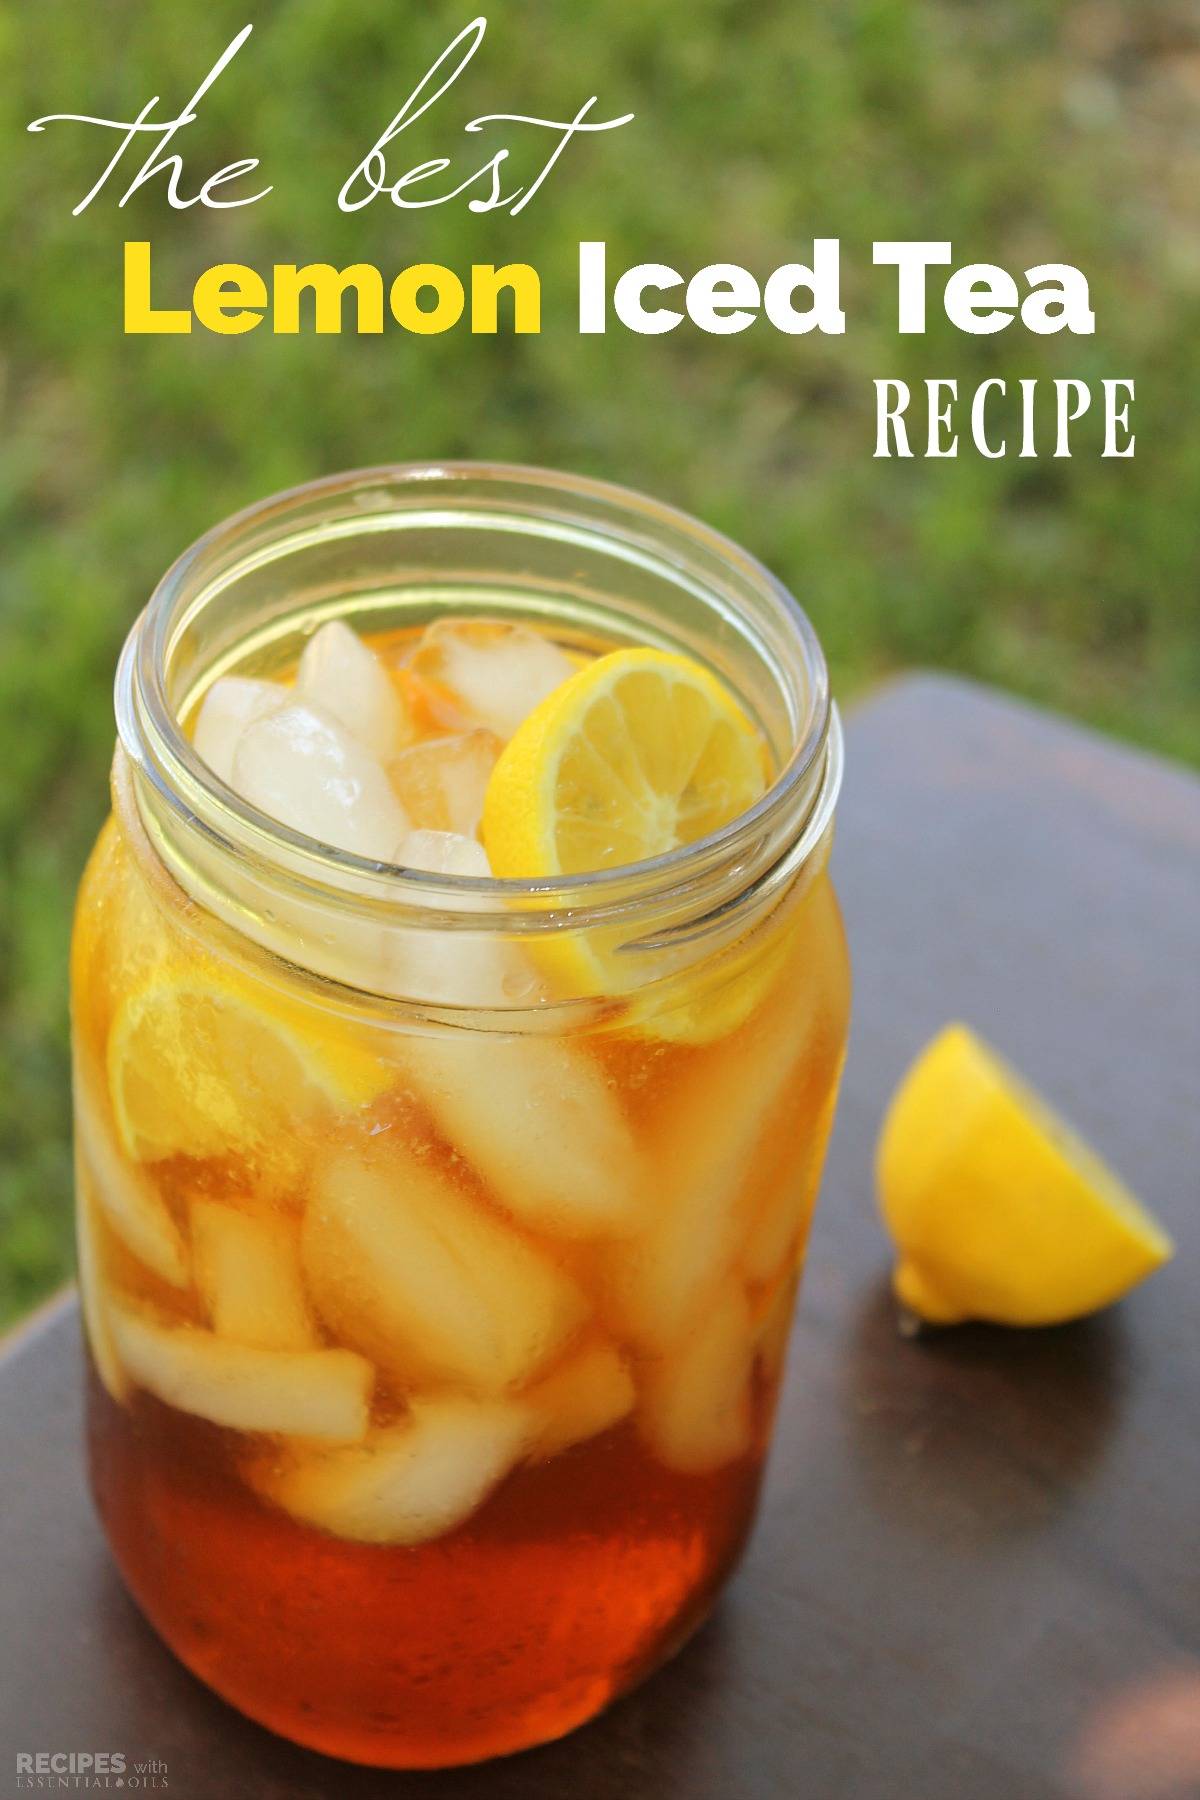 The-Best-Lemon-Iced-Tea-Recipe-from-RecipeswithEssentialOils.jpg